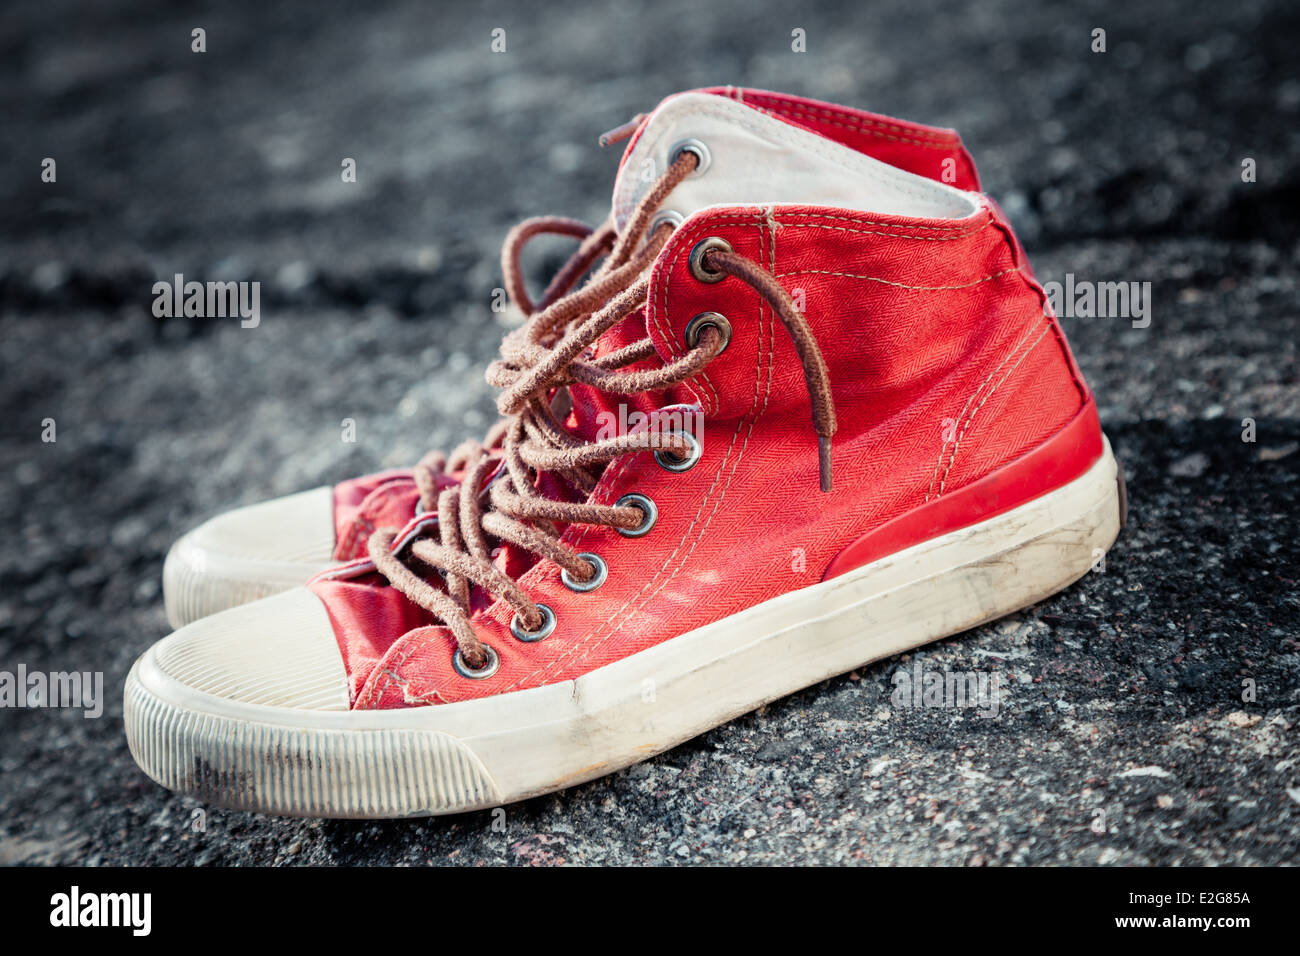 red sneakers on asphalt road Stock Photo